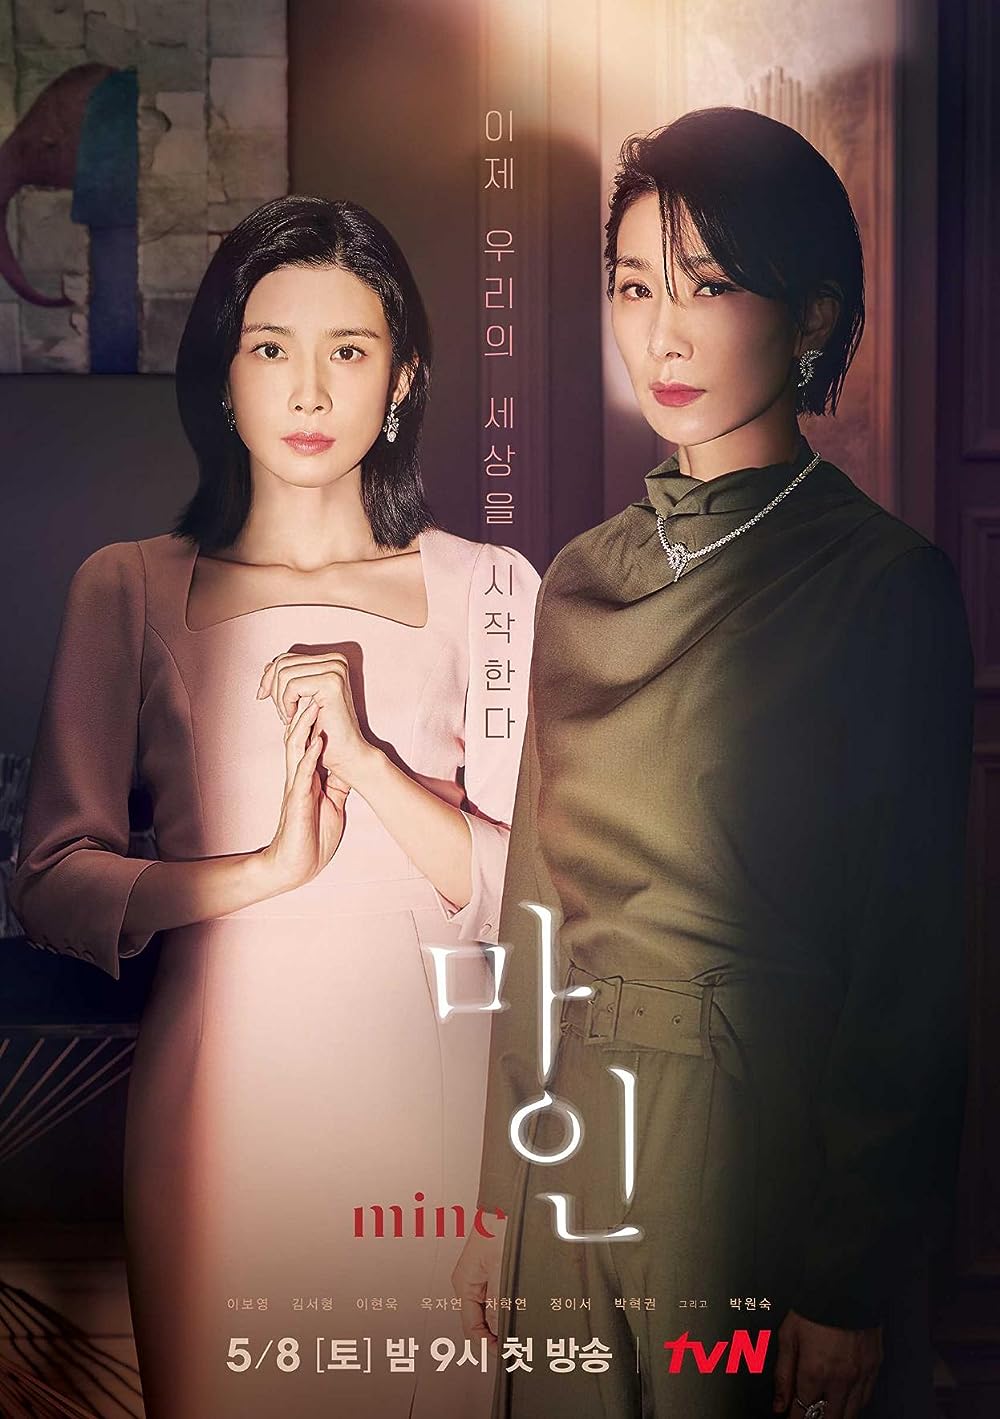 Reborn Rich': 7 Ways this Captivating K-Drama Retells the Story of Samsung  - Best of Korea